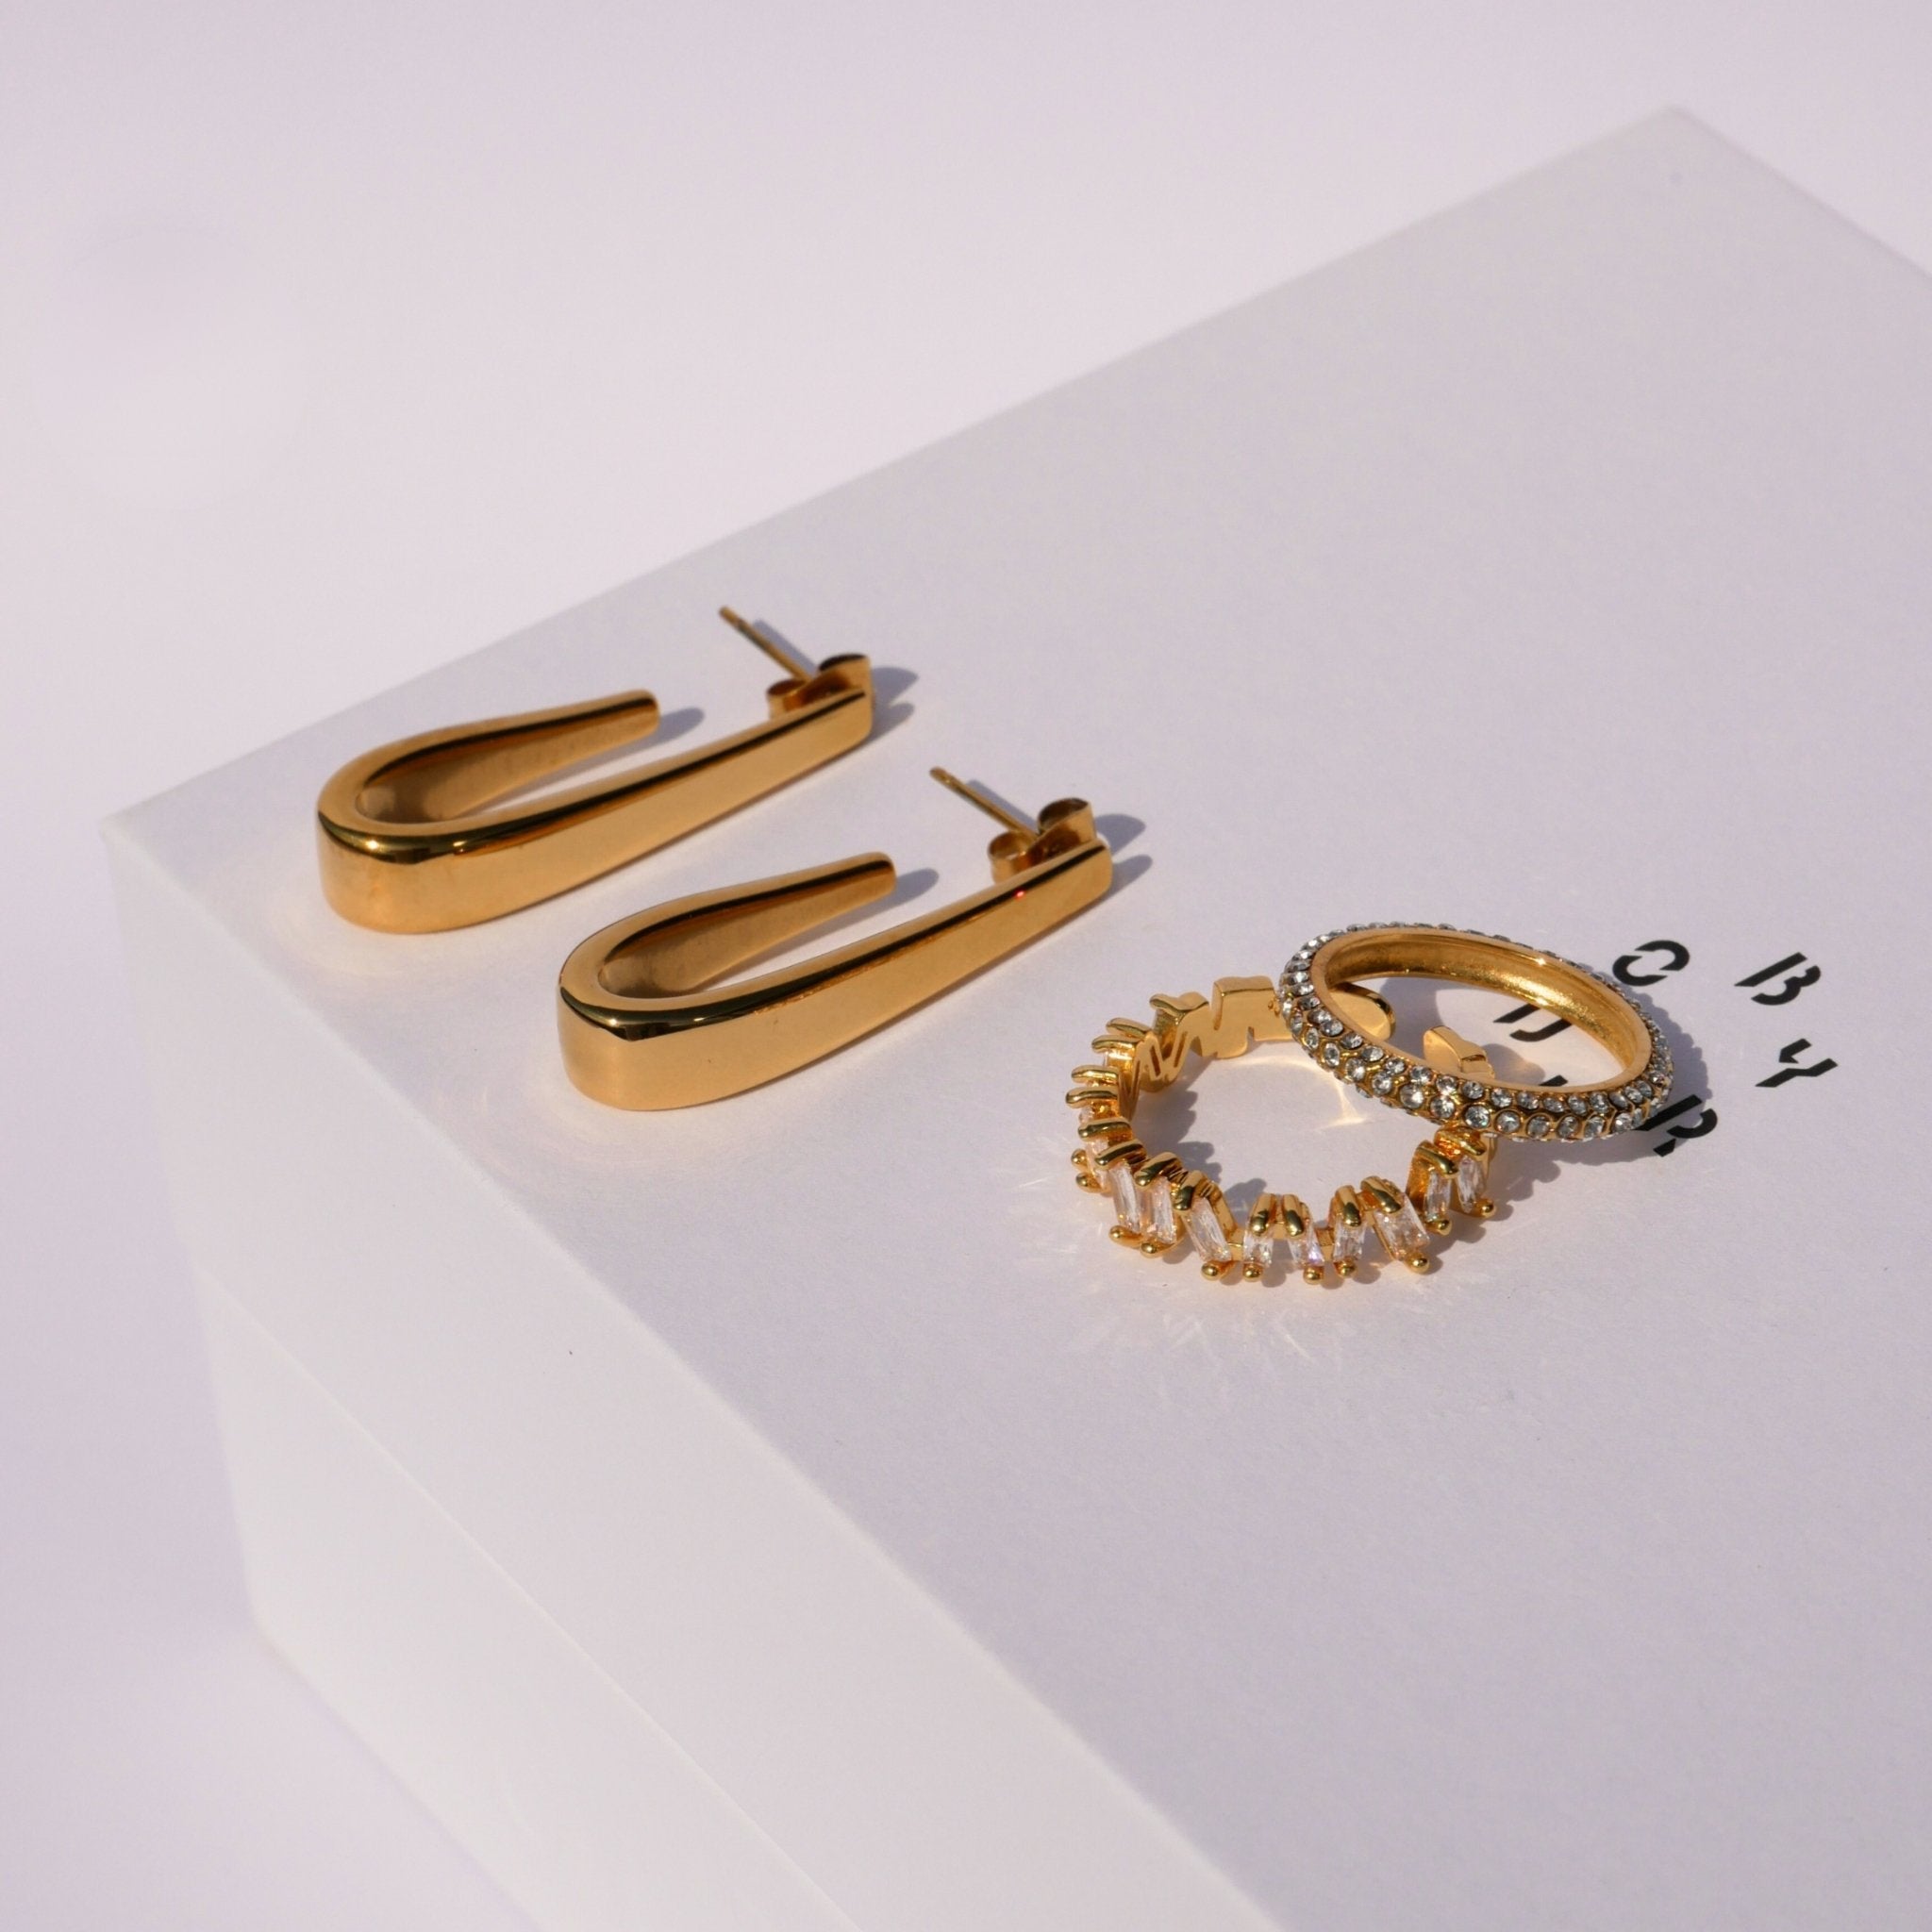 Tori Gold Hoop by Koréil Jewelry